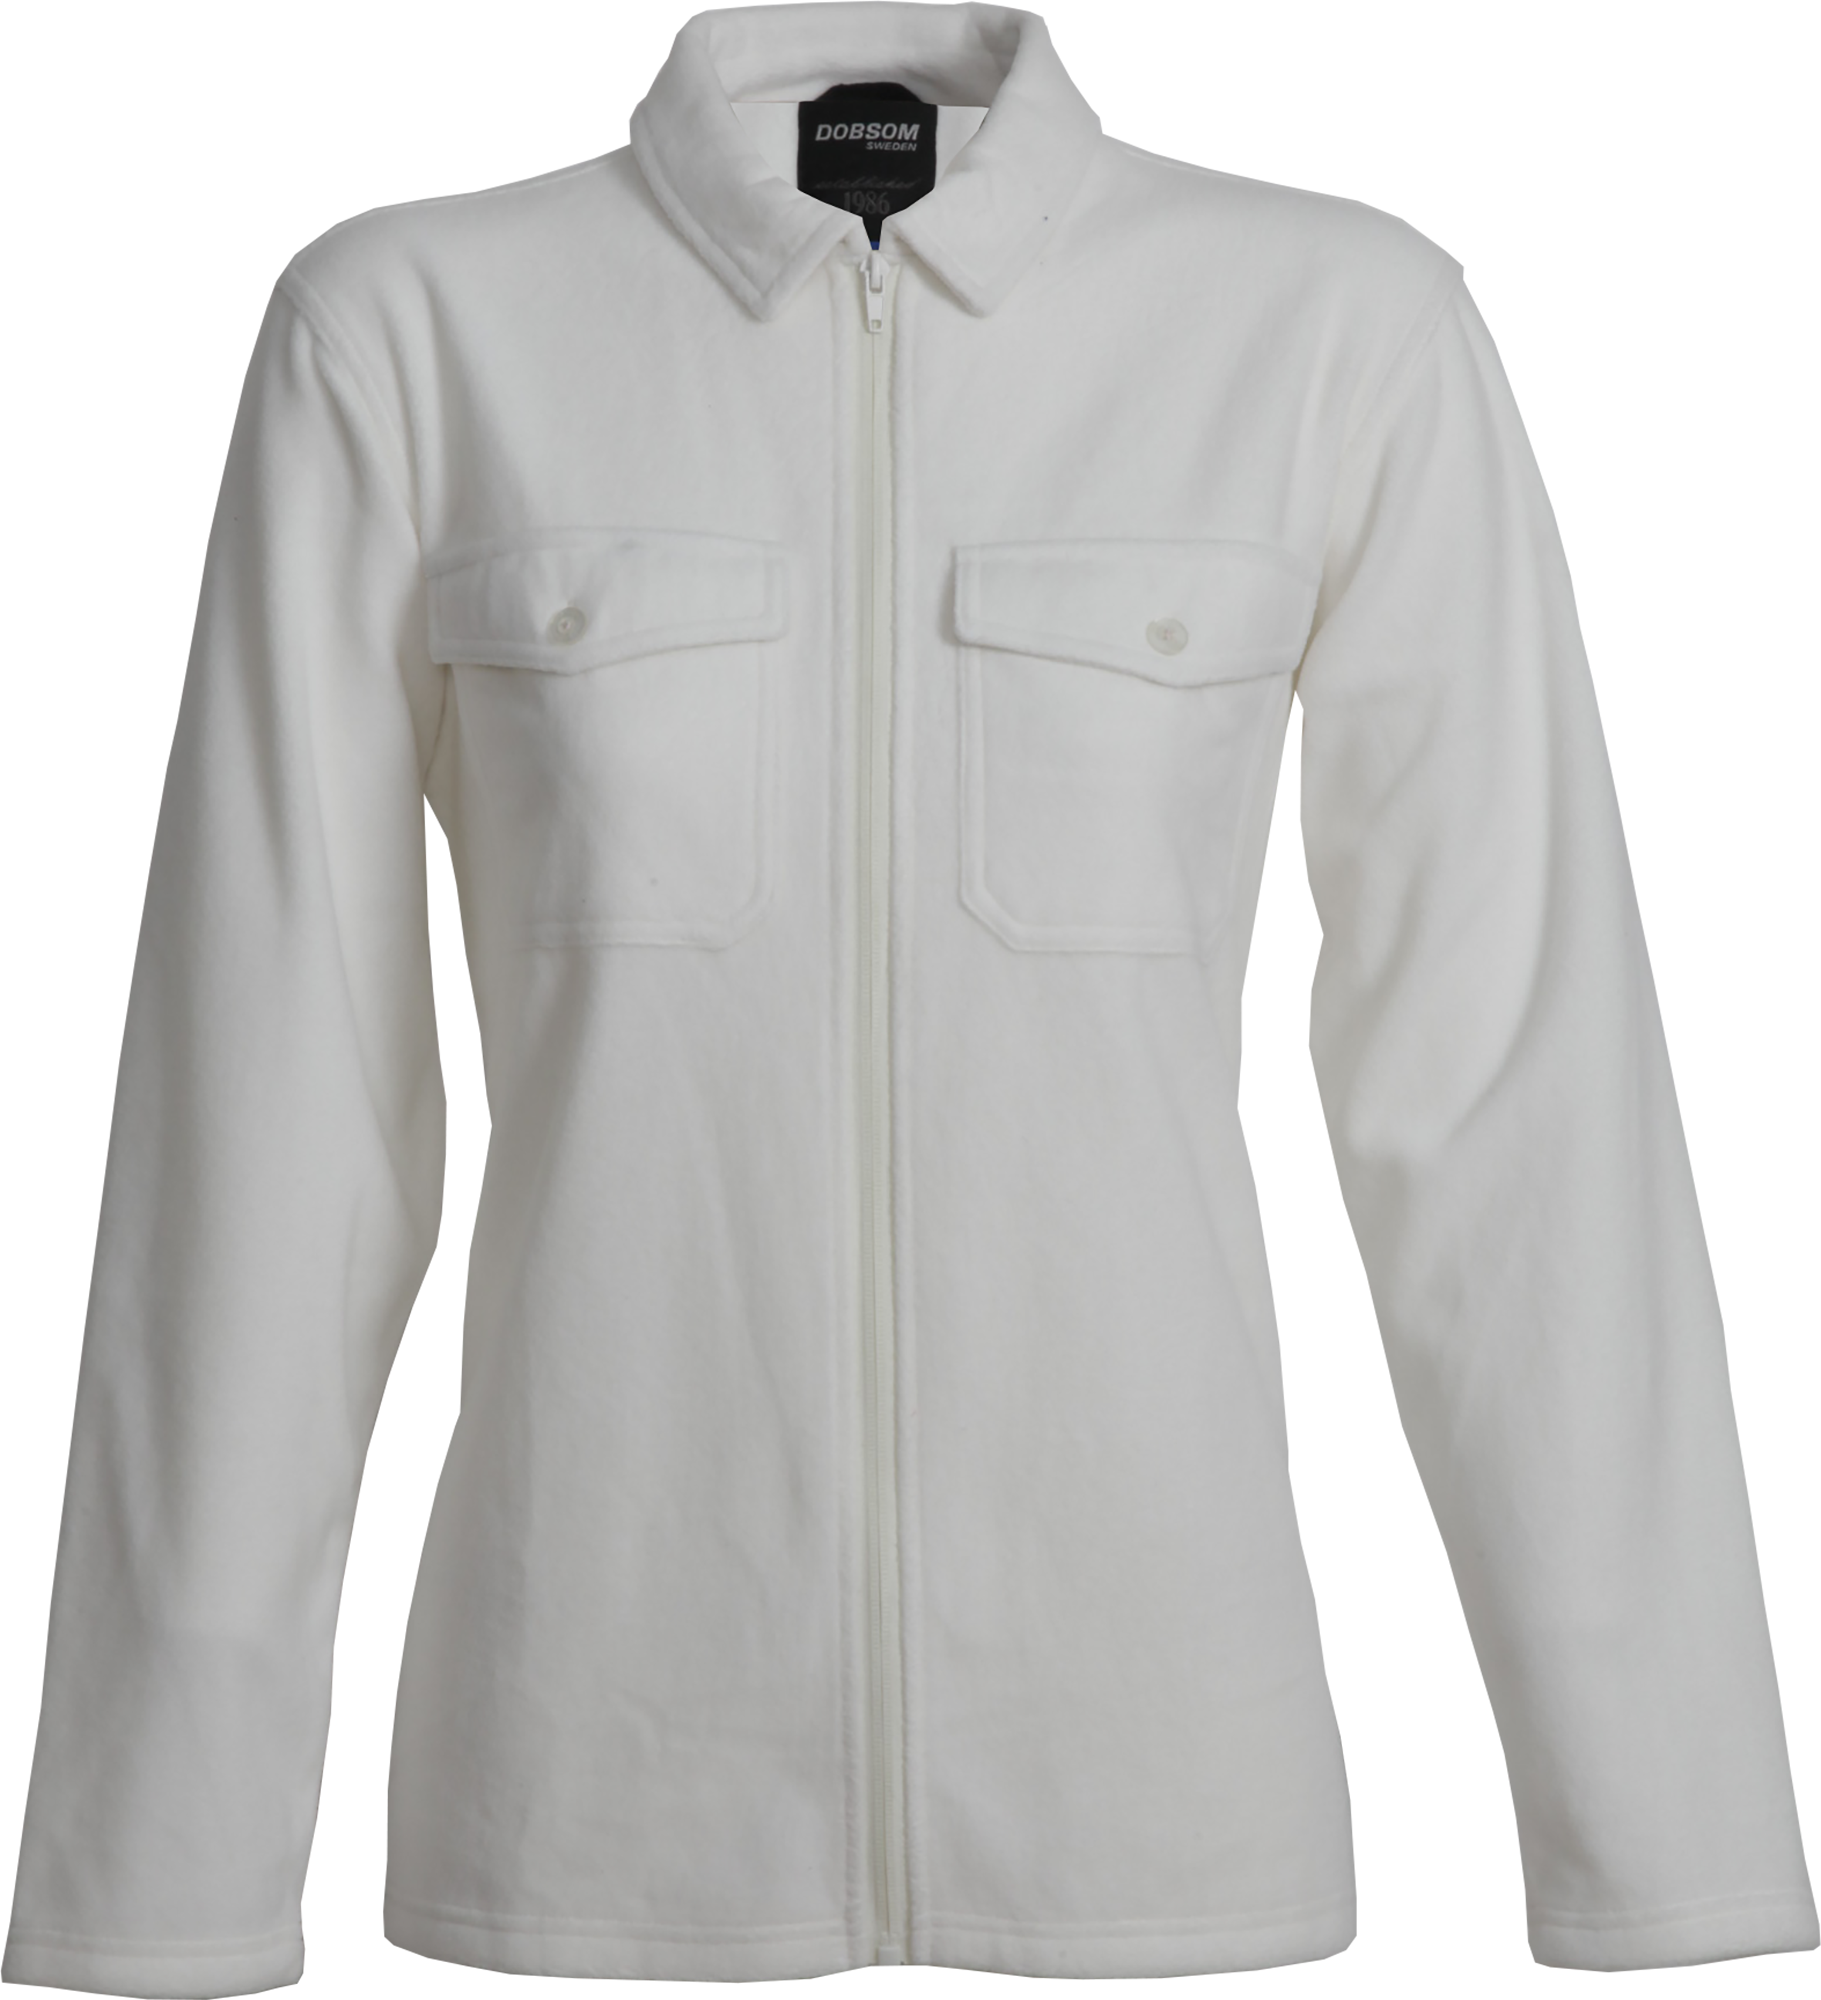 Dobsom Women's Pescara Fleece Shirt Offwhite 38, Off White